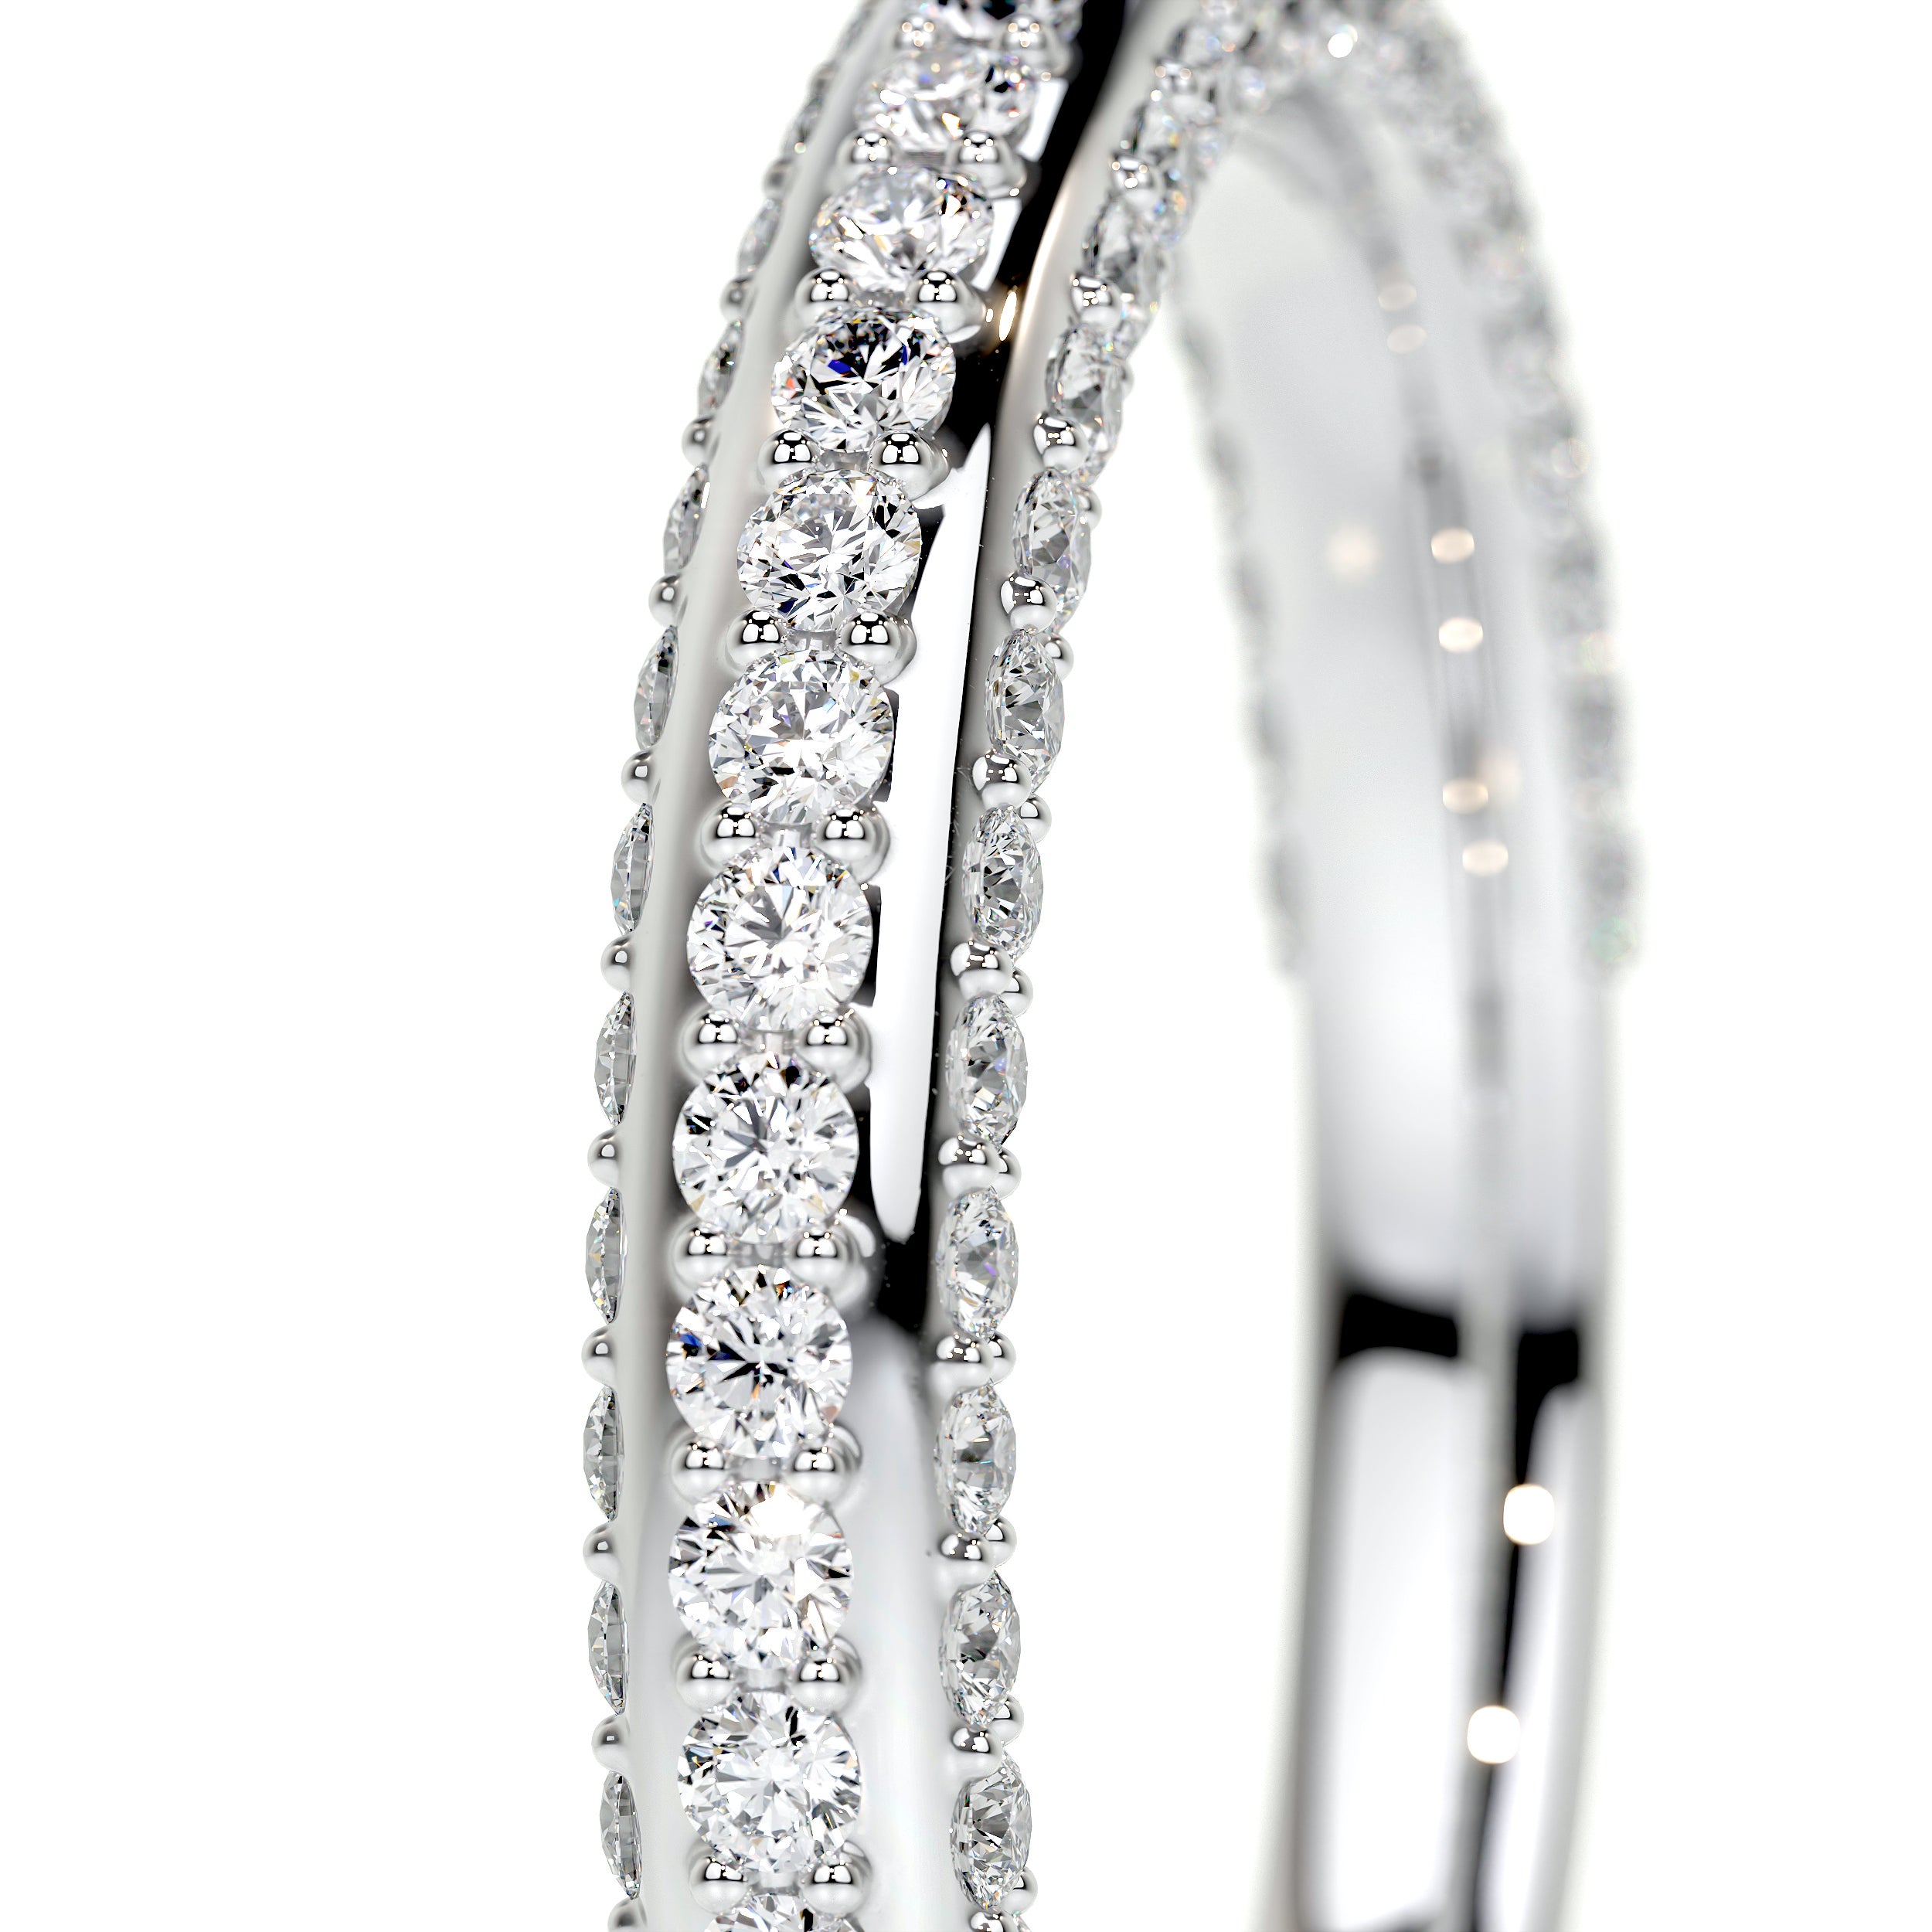 Anastasia Lab Grown Diamond Wedding Ring   (0.75 Carat) -14K White Gold